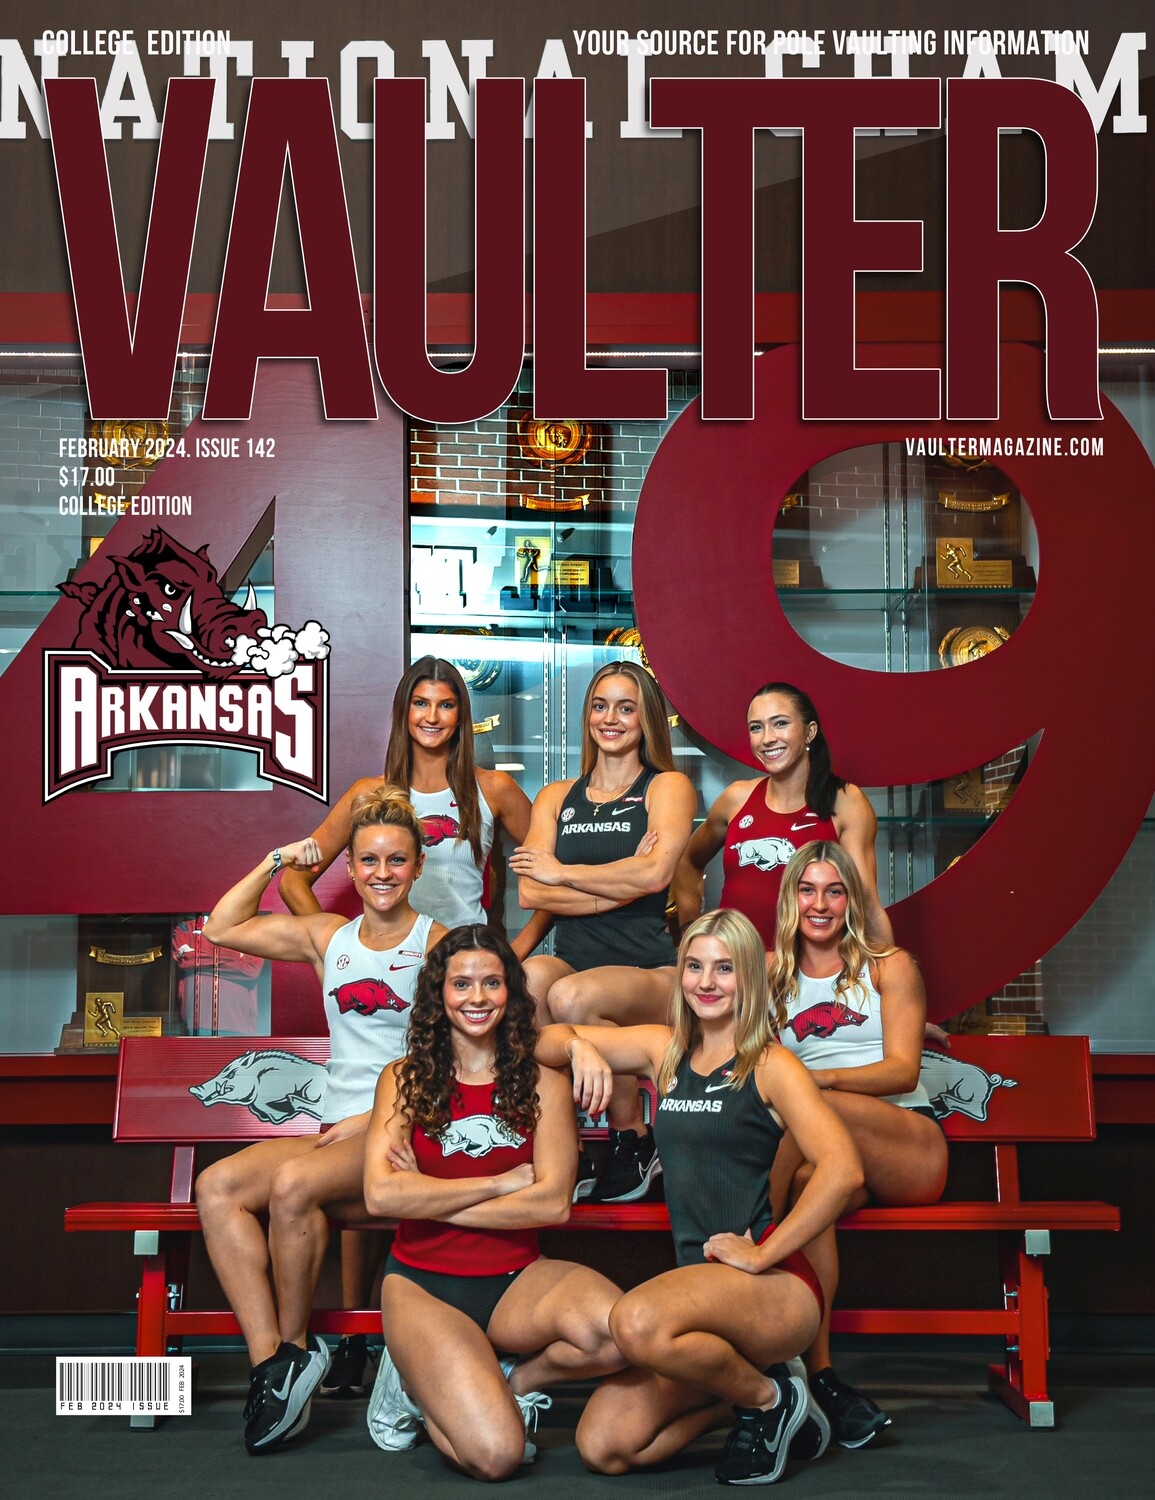 Feb 2024 University of Arkansas Issue of Vaulter Magazine U.S. Standard Mail